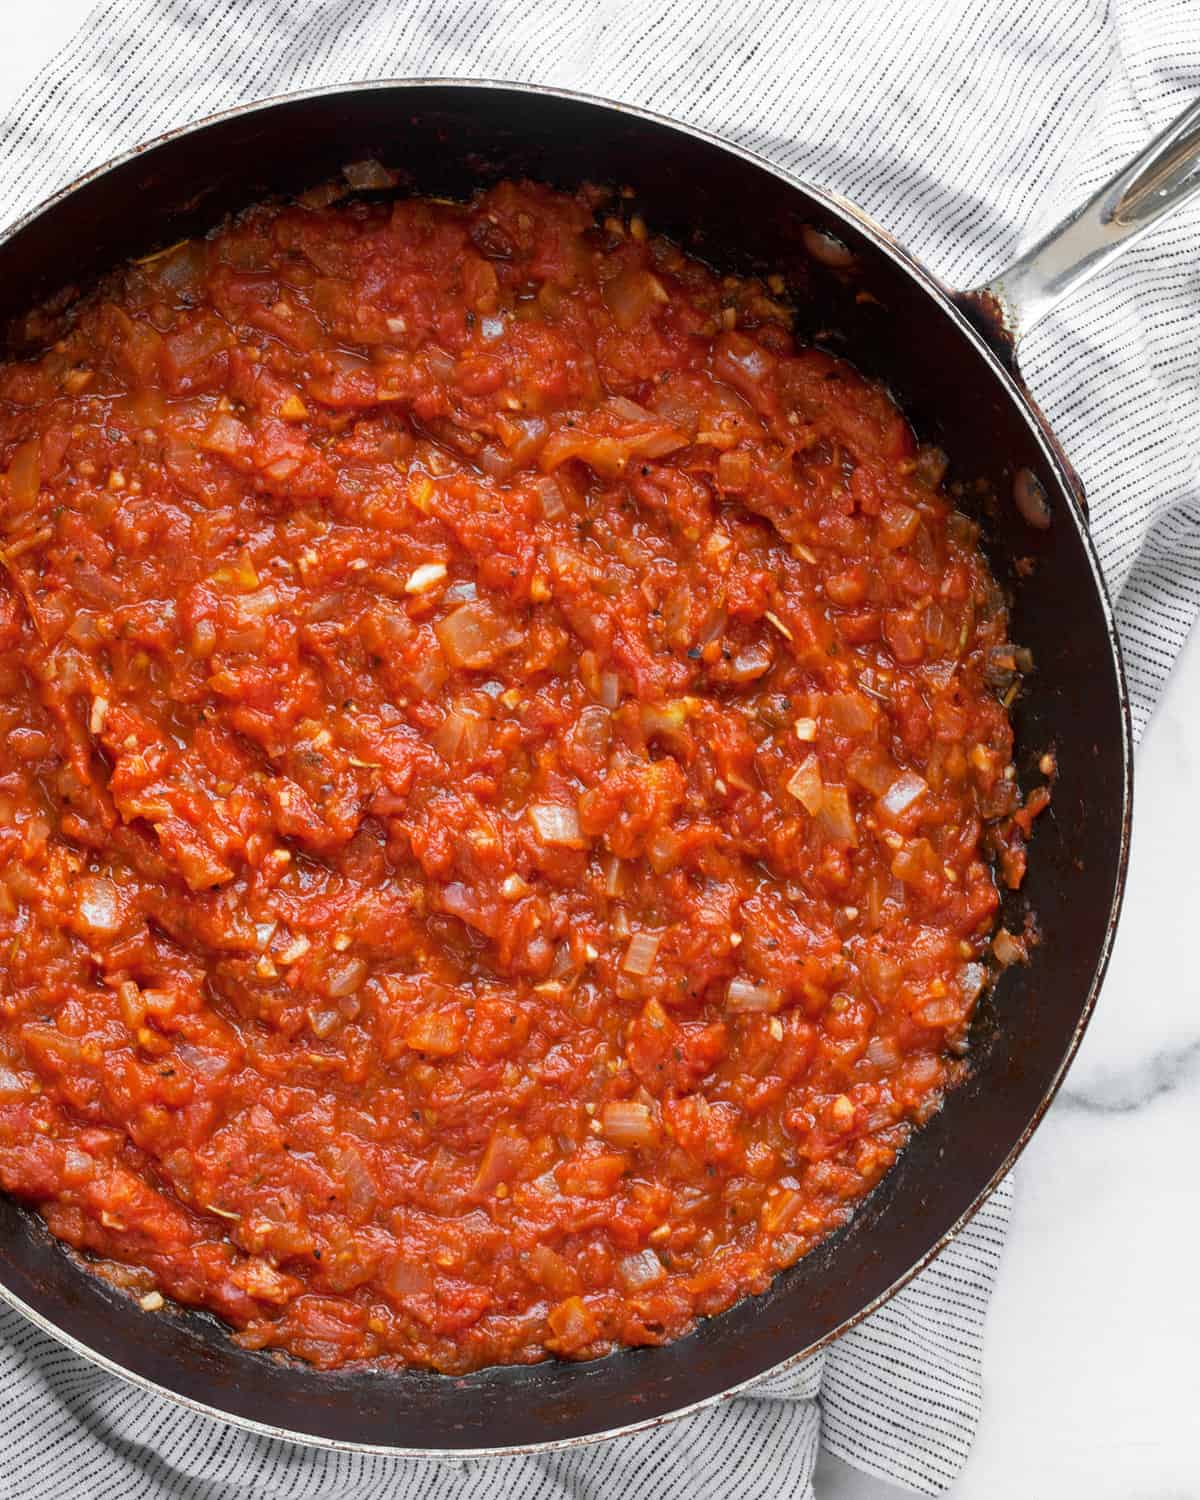 Roma tomato sauce in a skillet.